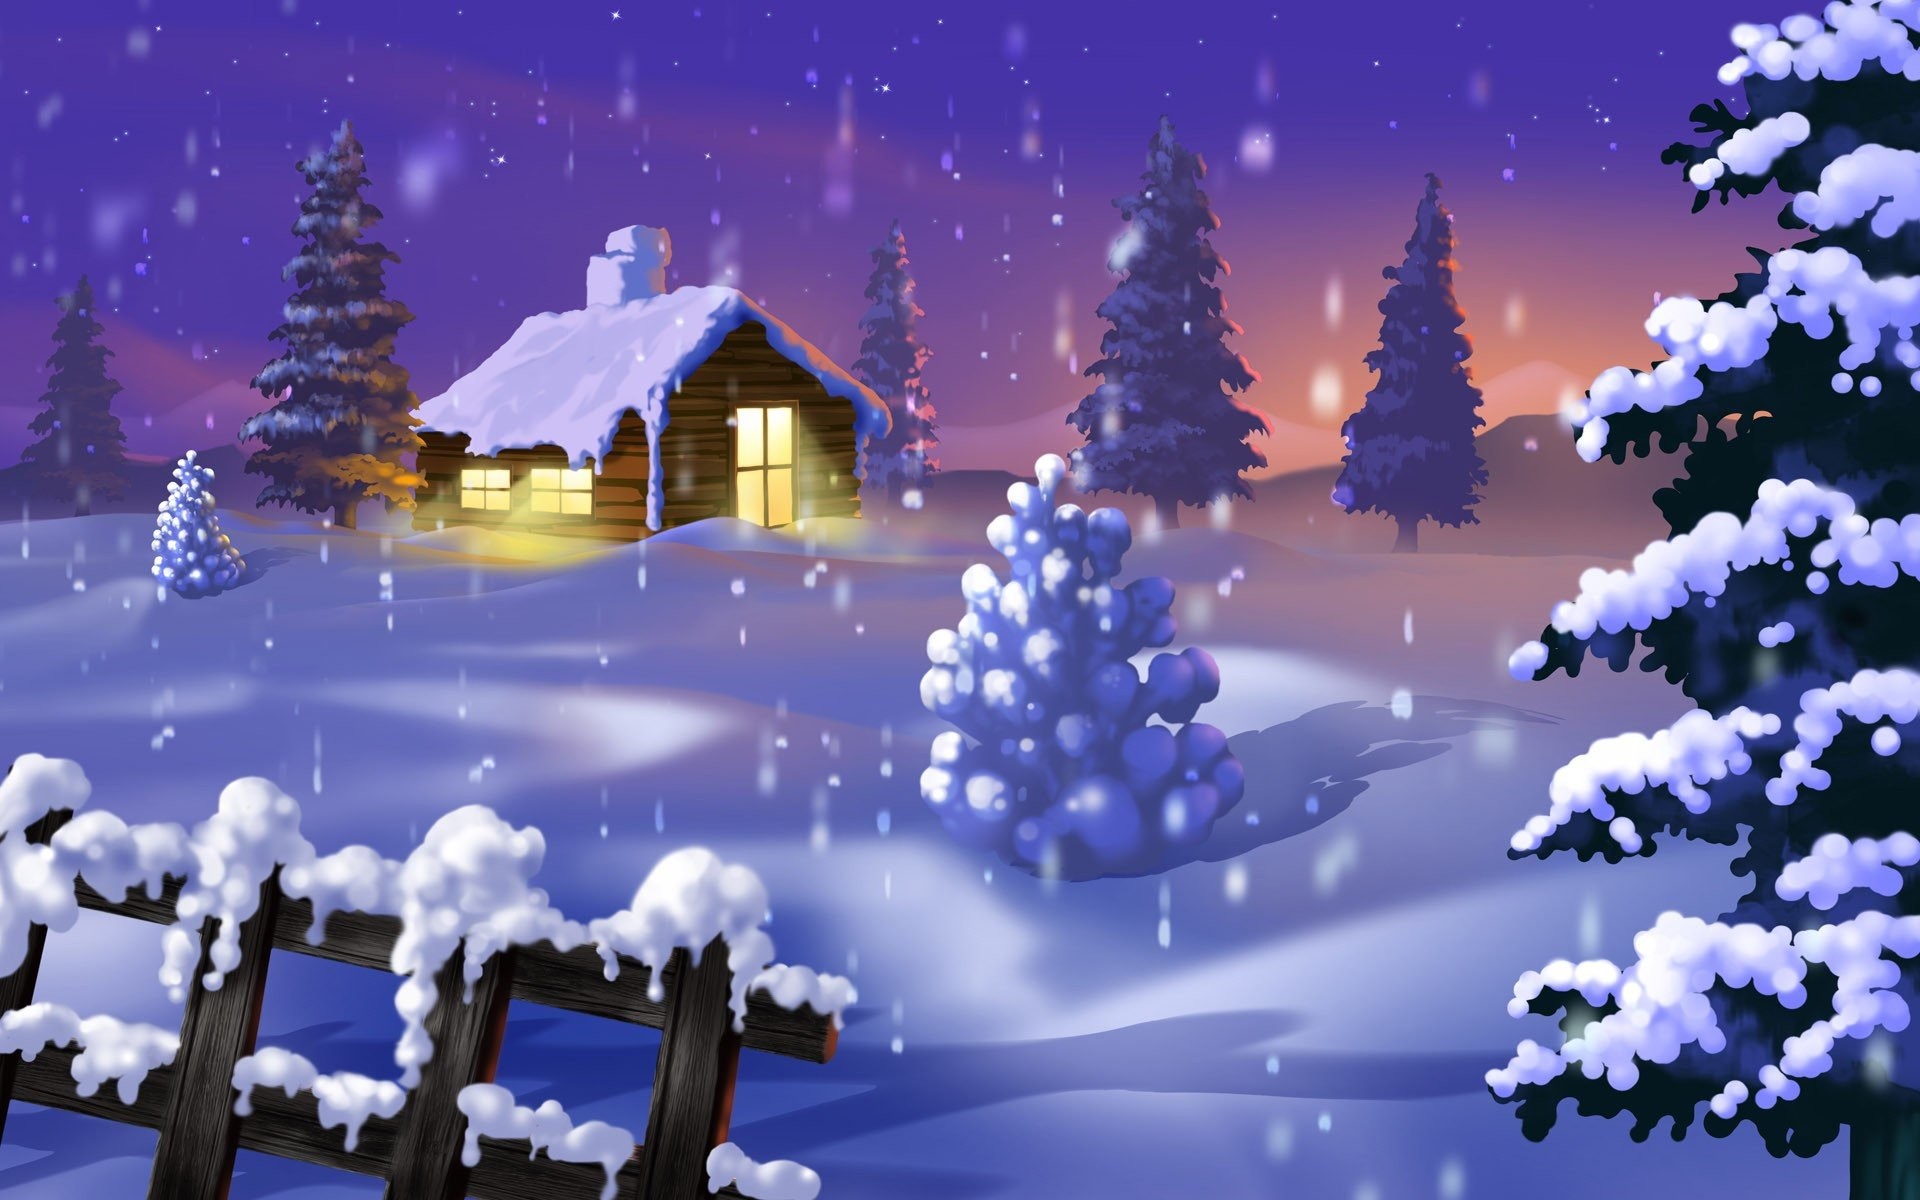 Snowy Christmas Scenes Wallpaper Image